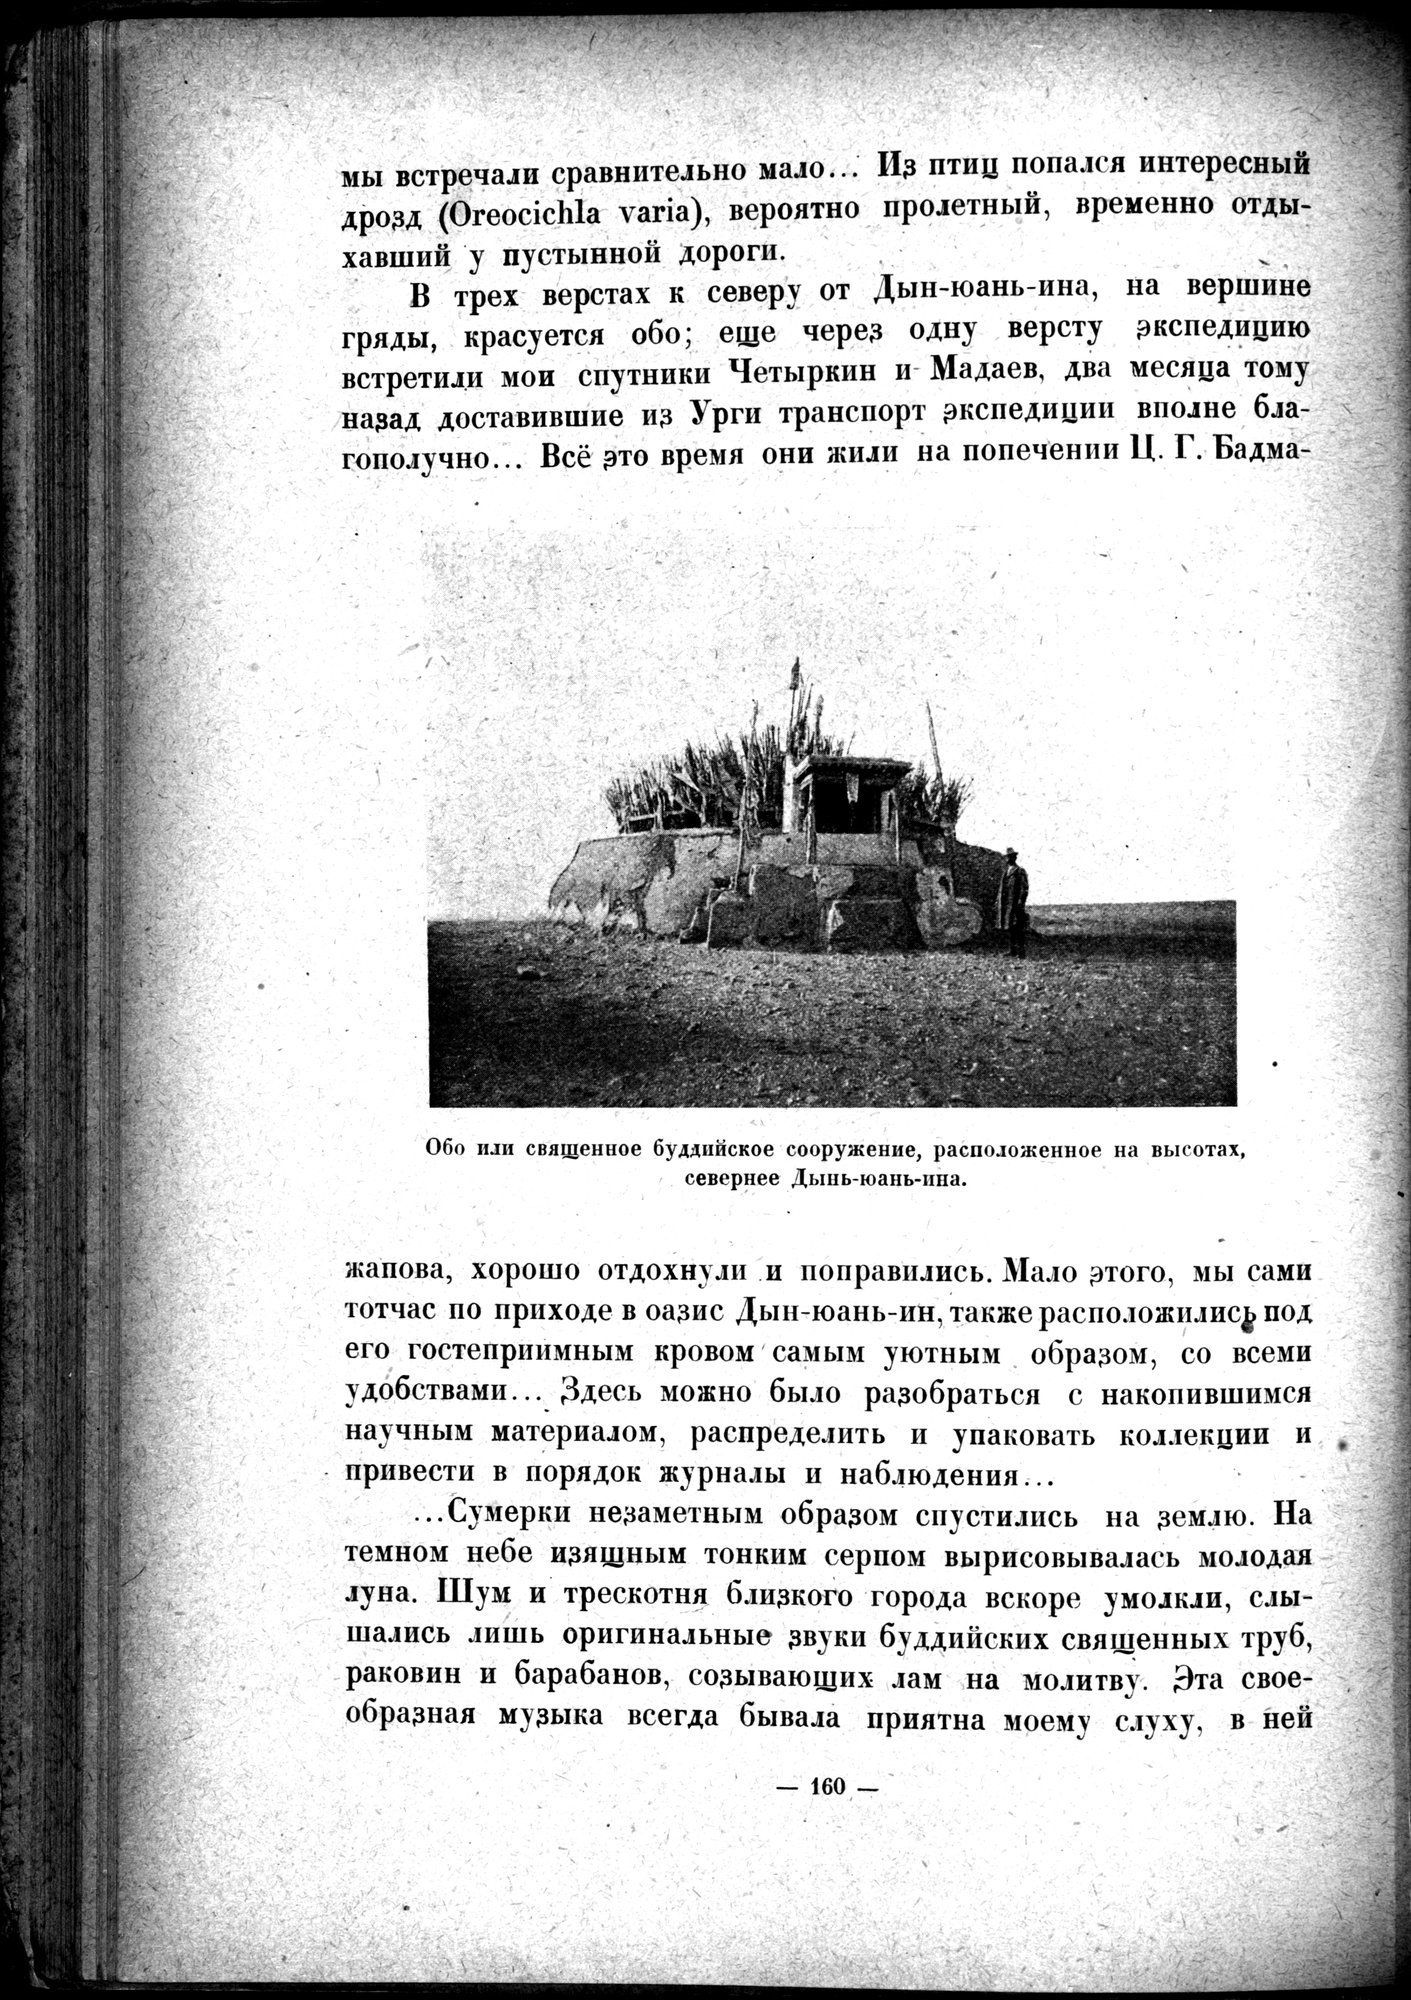 Mongoliya i Amdo i mertby gorod Khara-Khoto : vol.1 / Page 188 (Grayscale High Resolution Image)